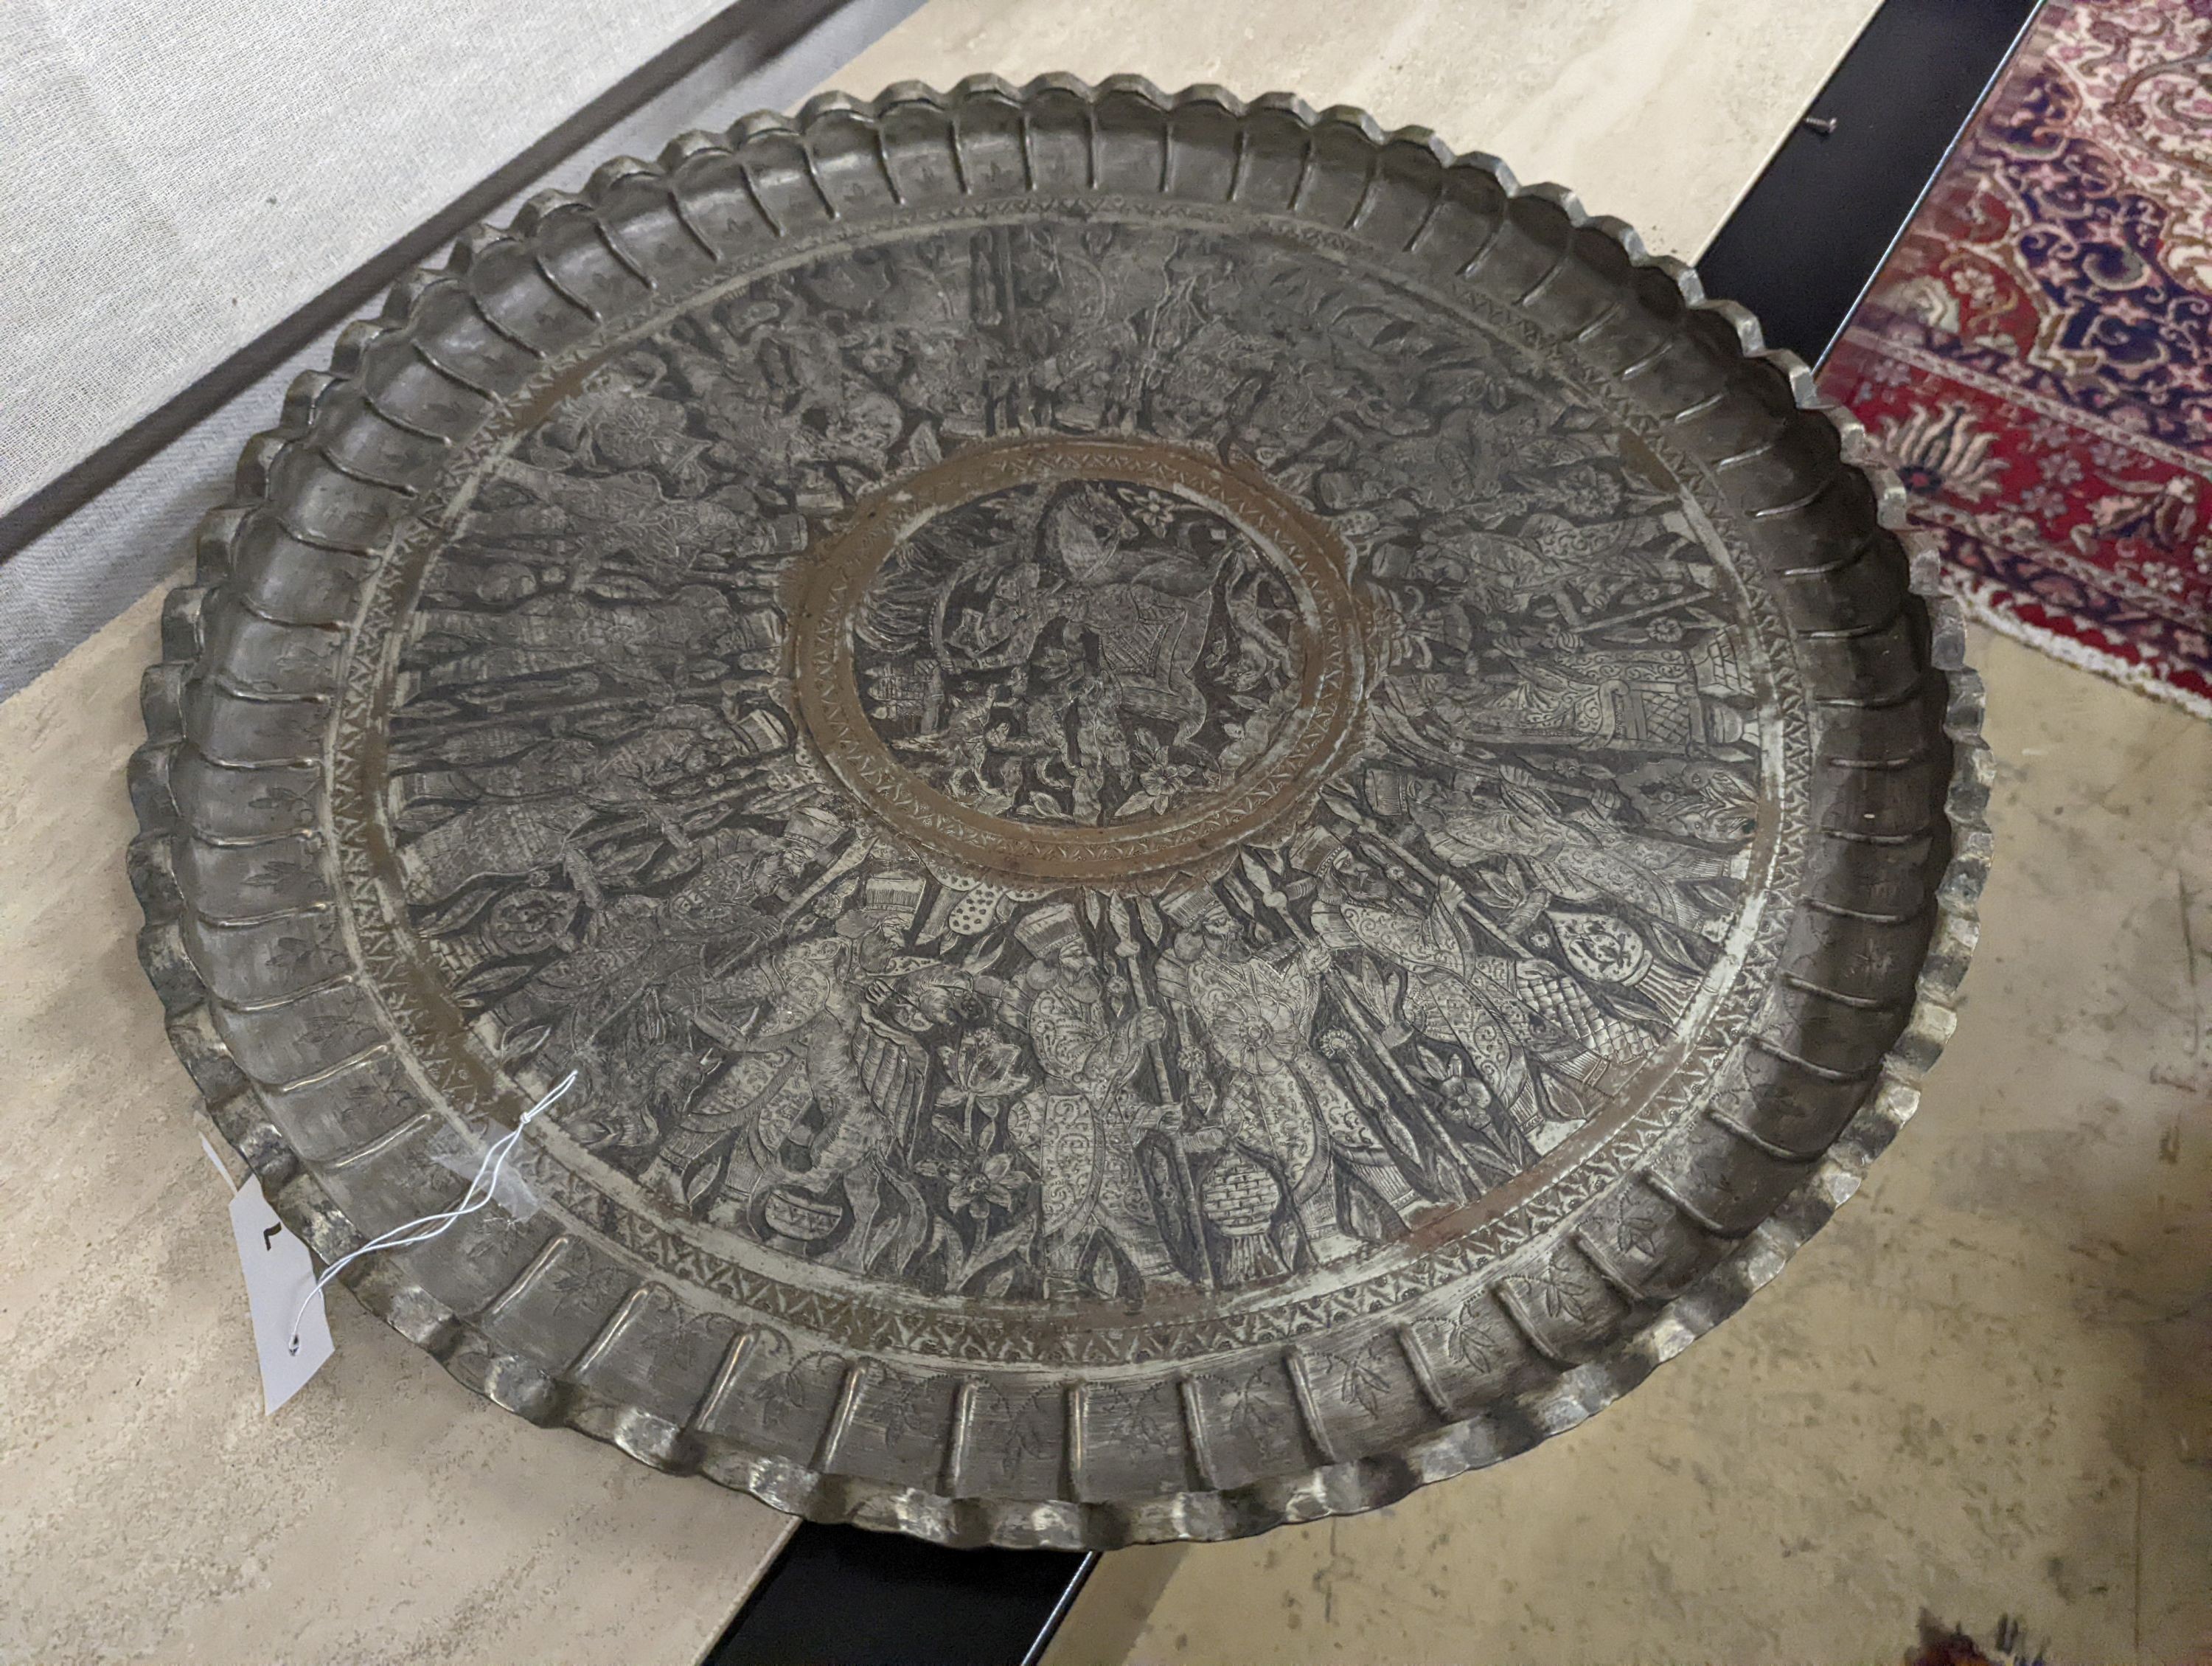 A Persian engraved circular tray, diameter 67cm